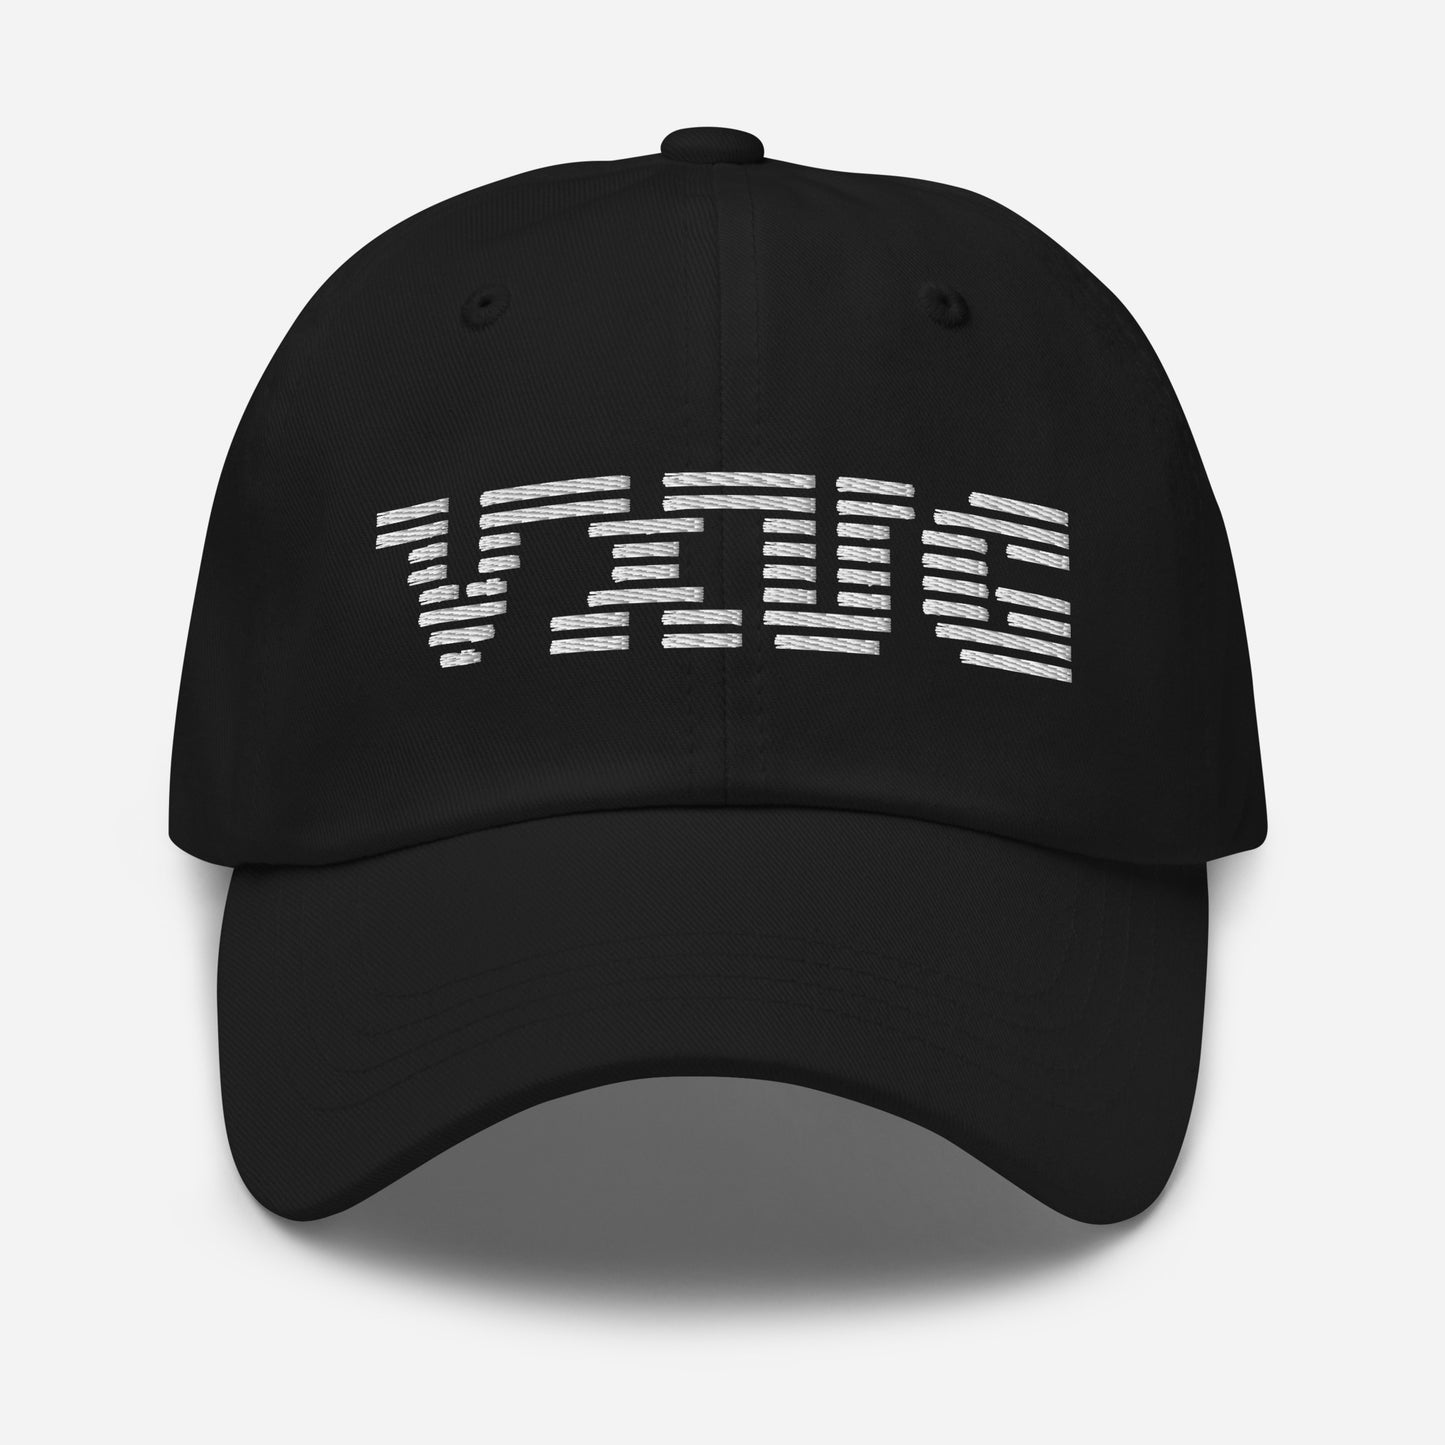 VXUG Corporate Hat